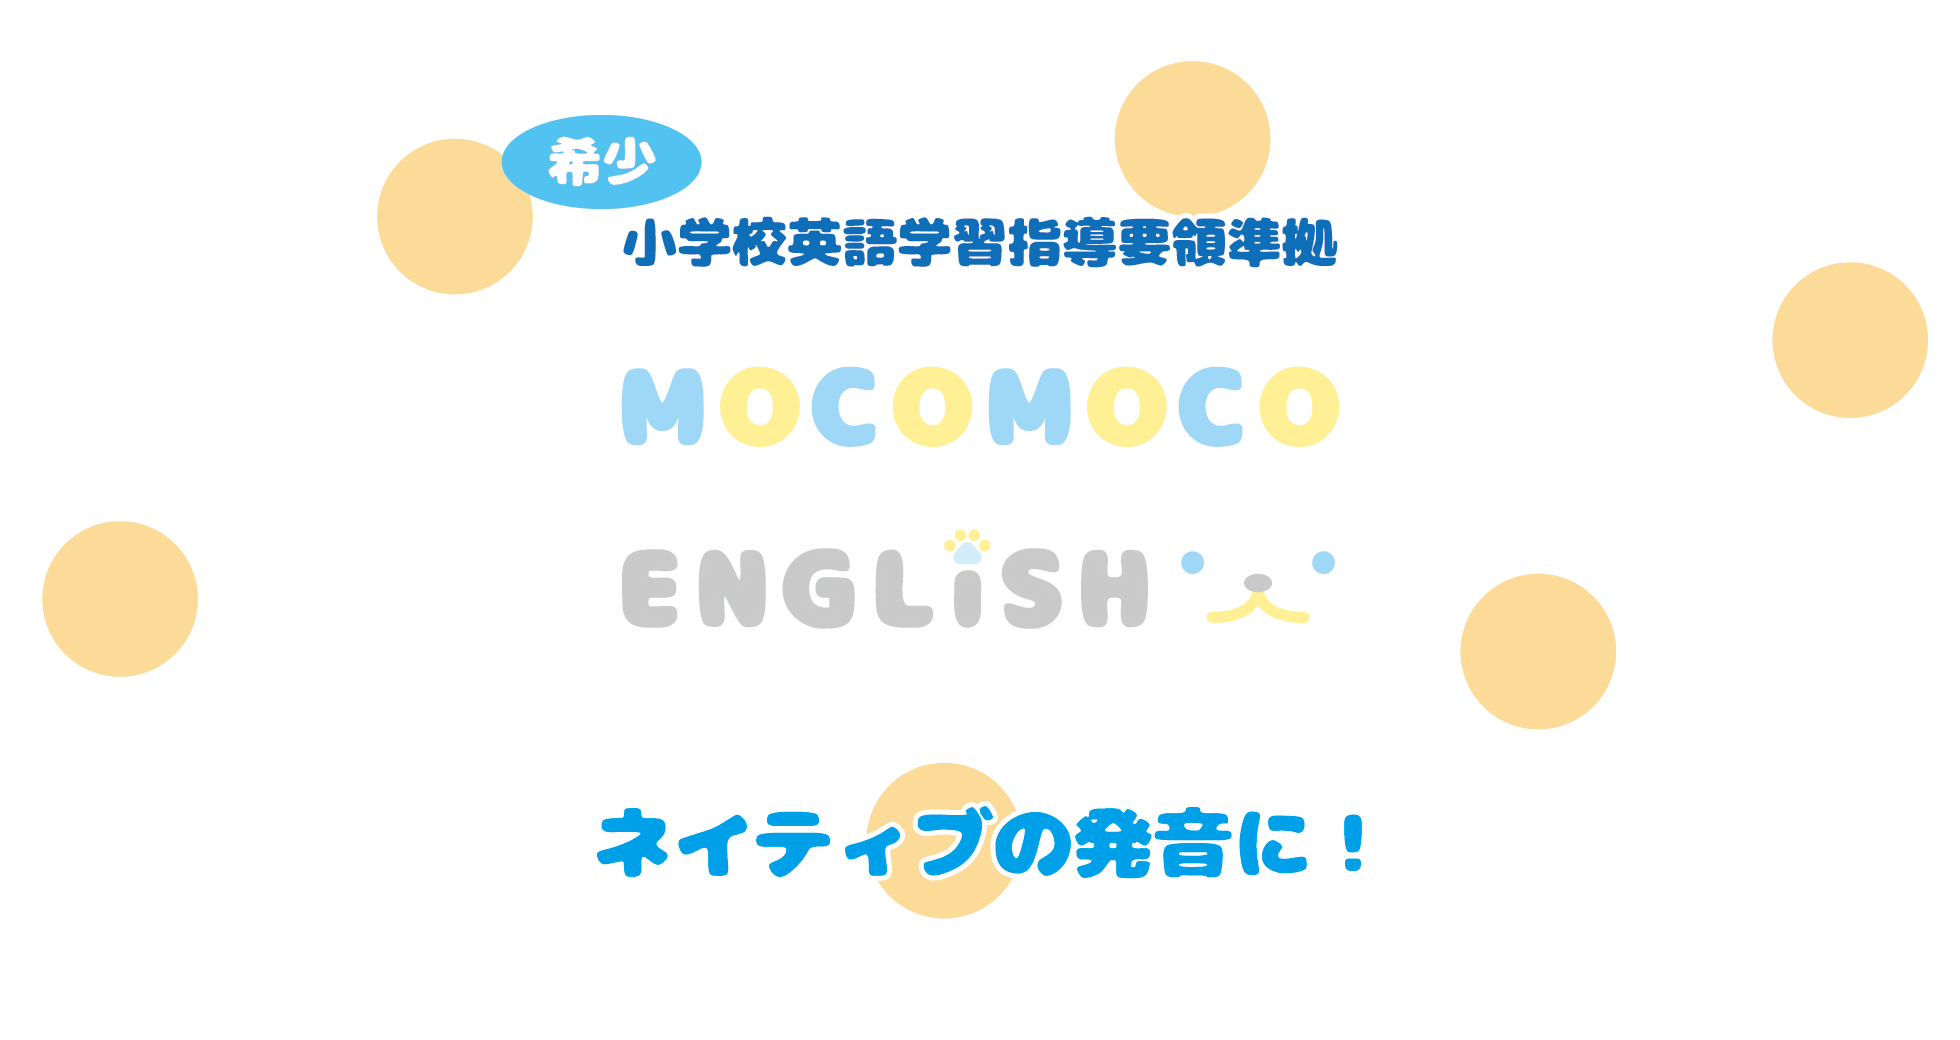 MOCOMOCO ENGLiSH title